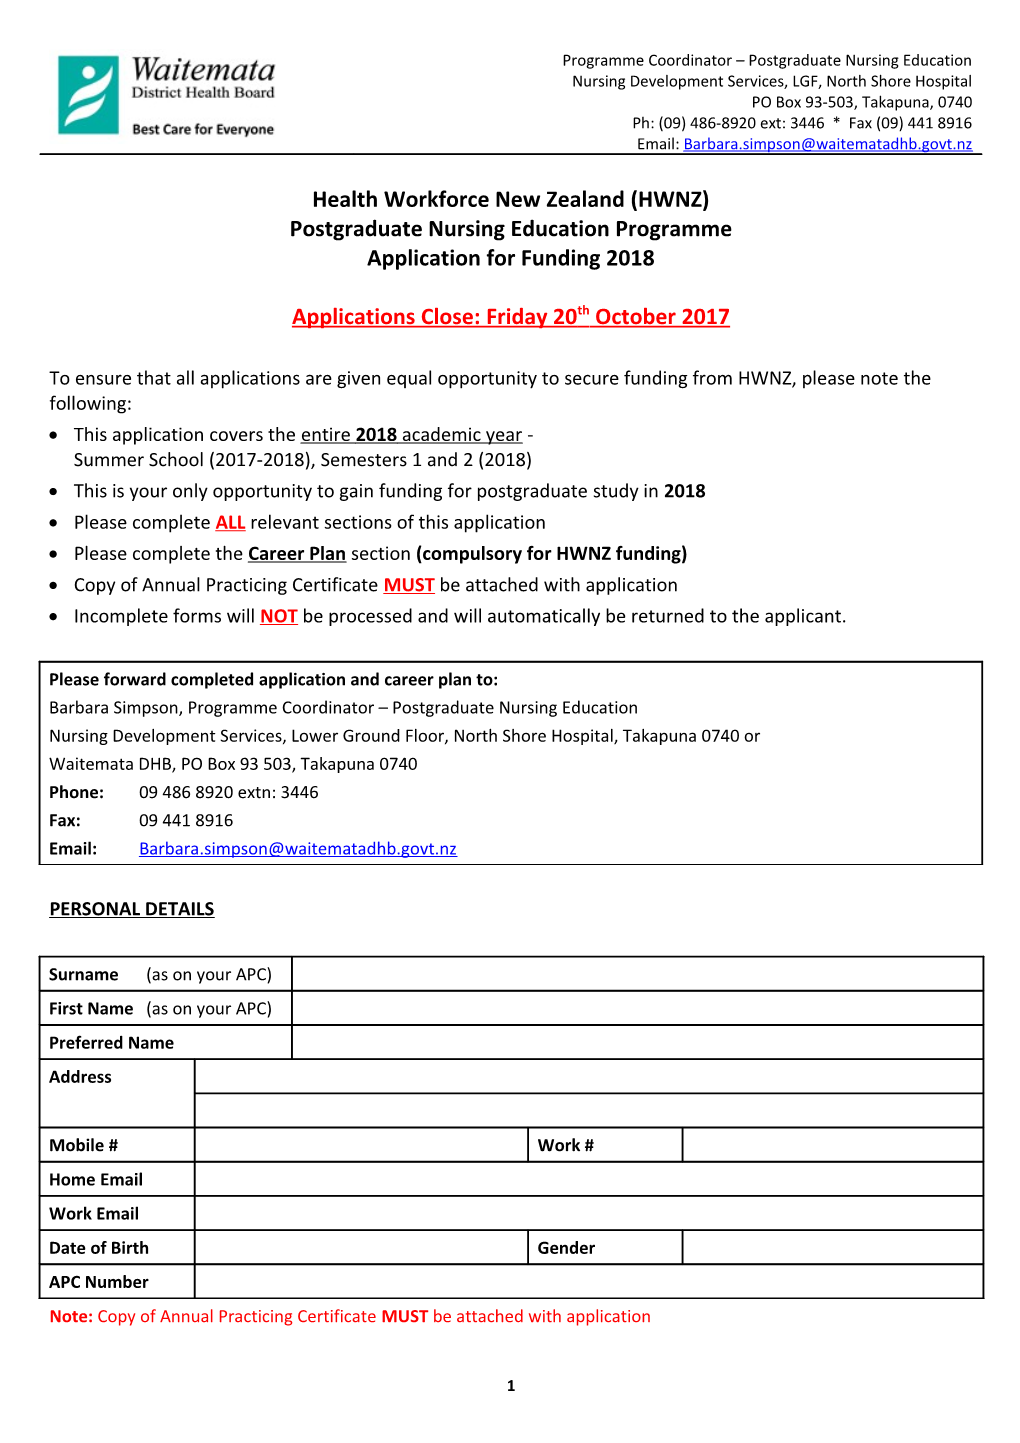 Health Workforce New Zealand (HWNZ) Postgraduate Nursing Education Programme Application